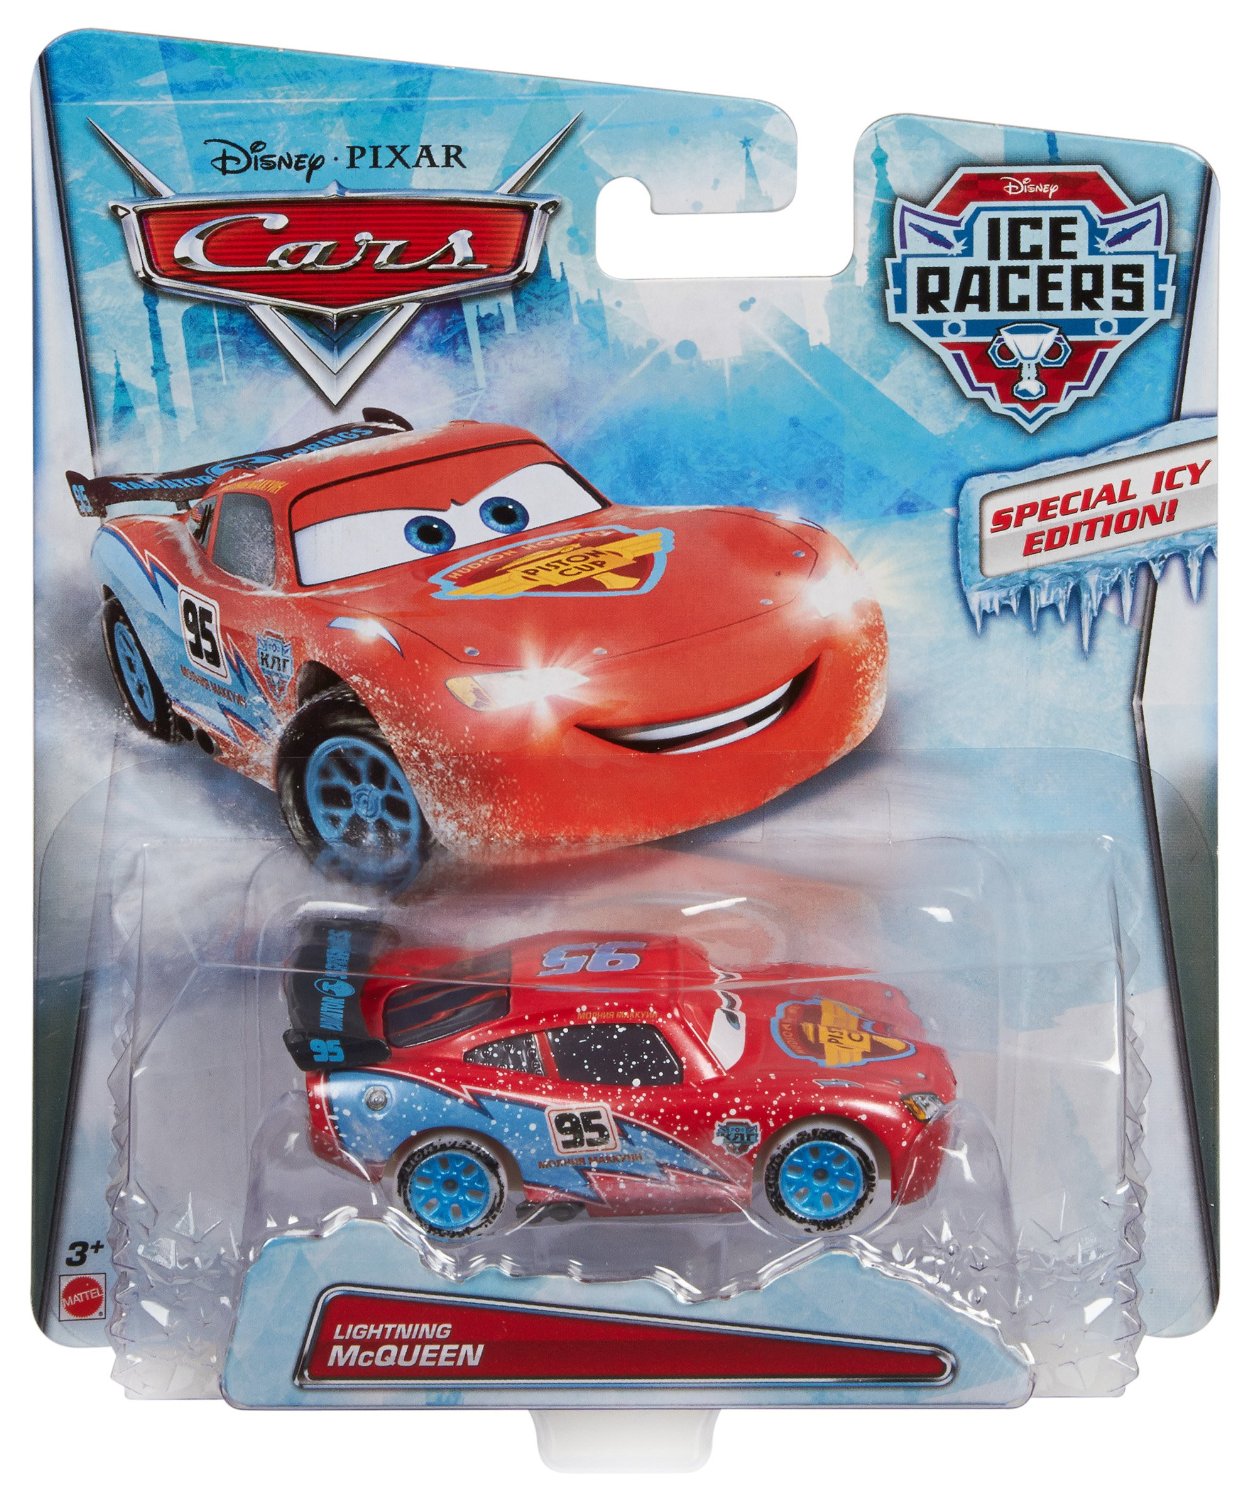 Тачки 2: Молния Маквин (Cars 2: Ice Racers Lightning McQueen)